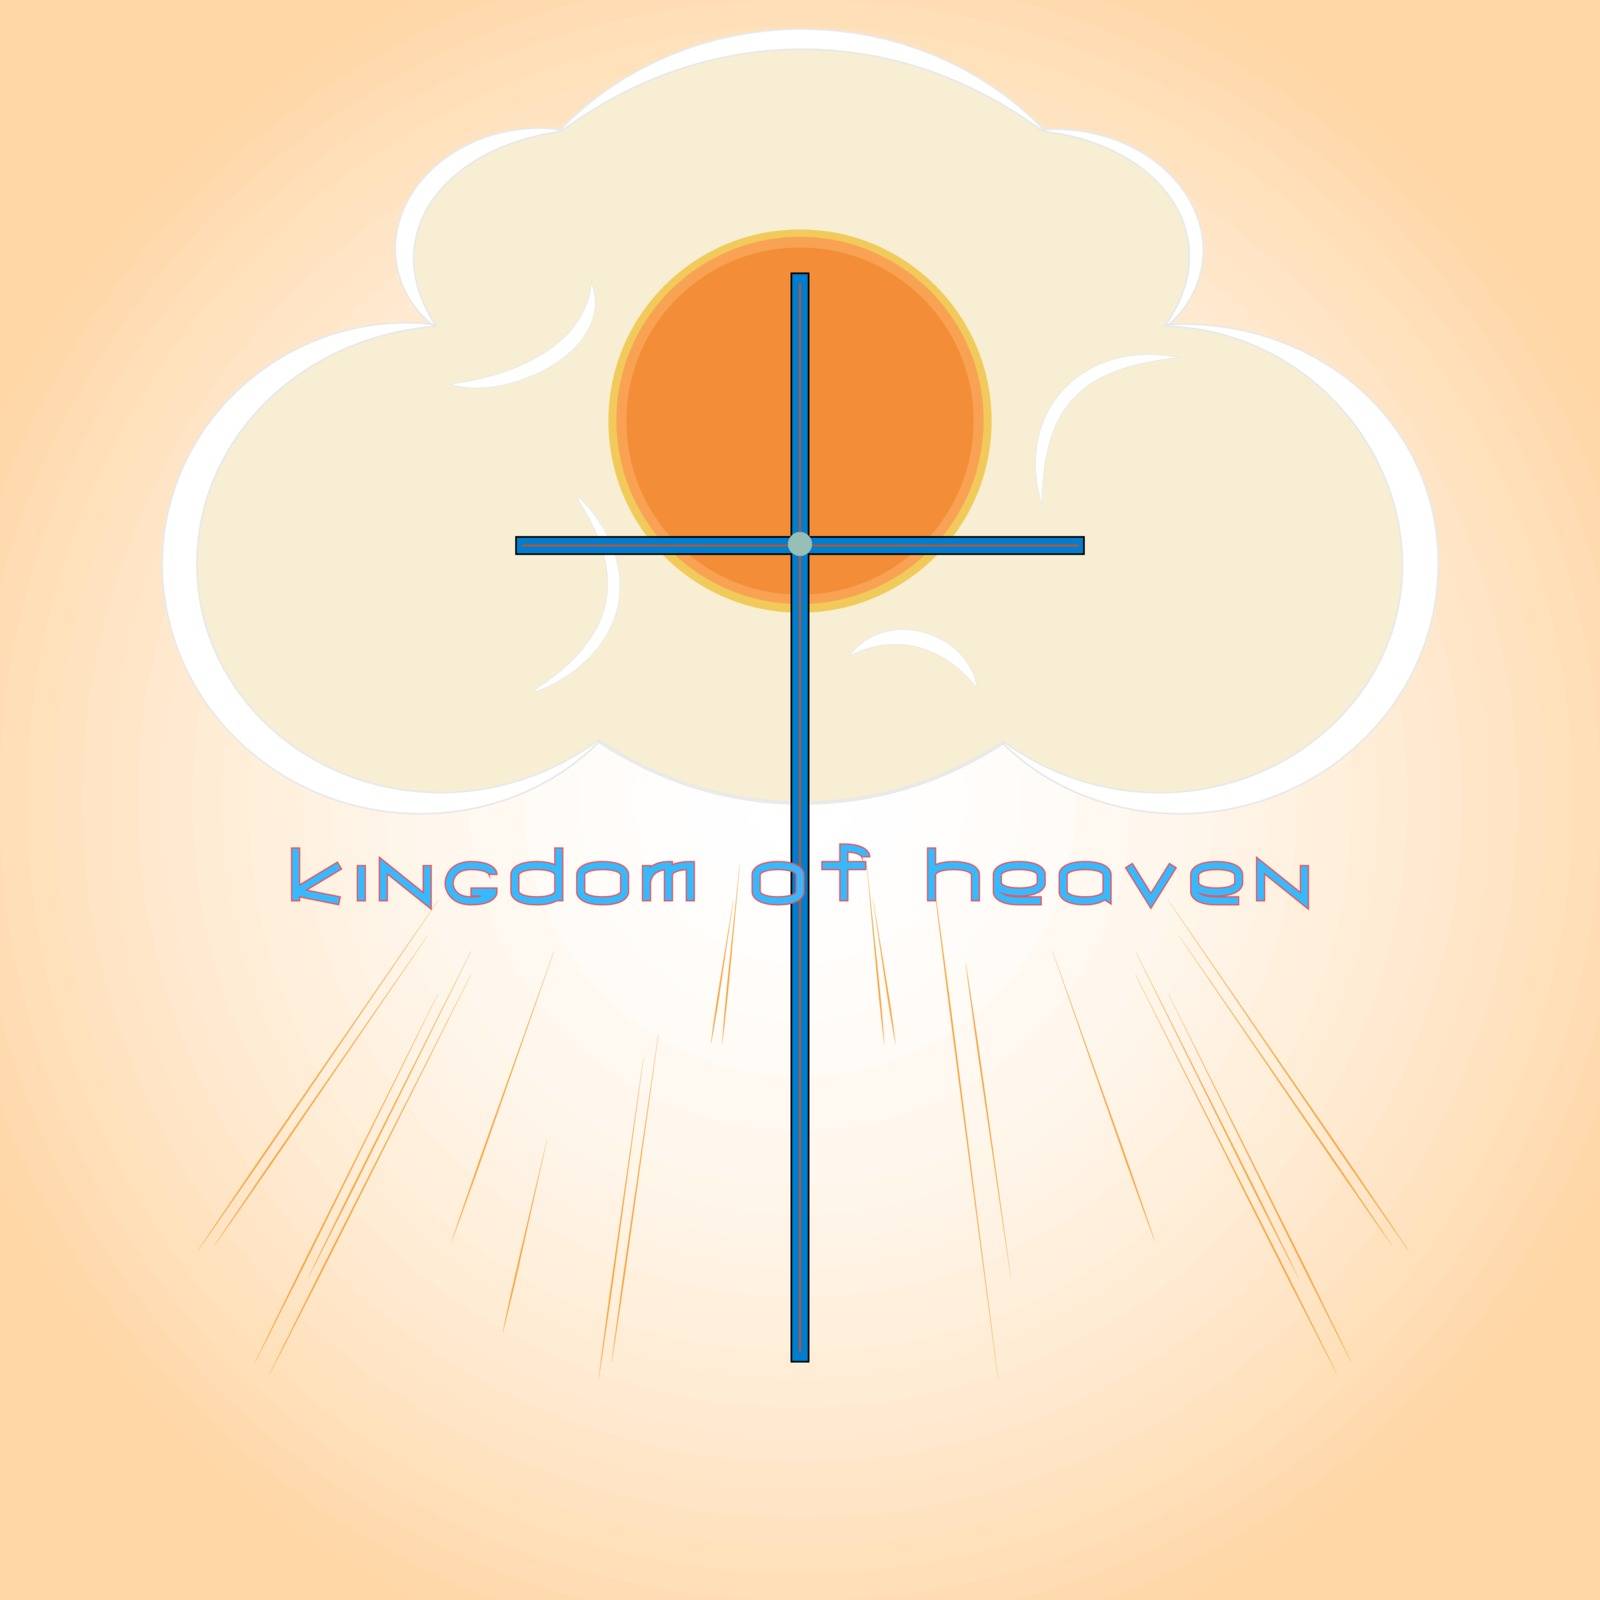 kingdom of heaven by Alexandrus1